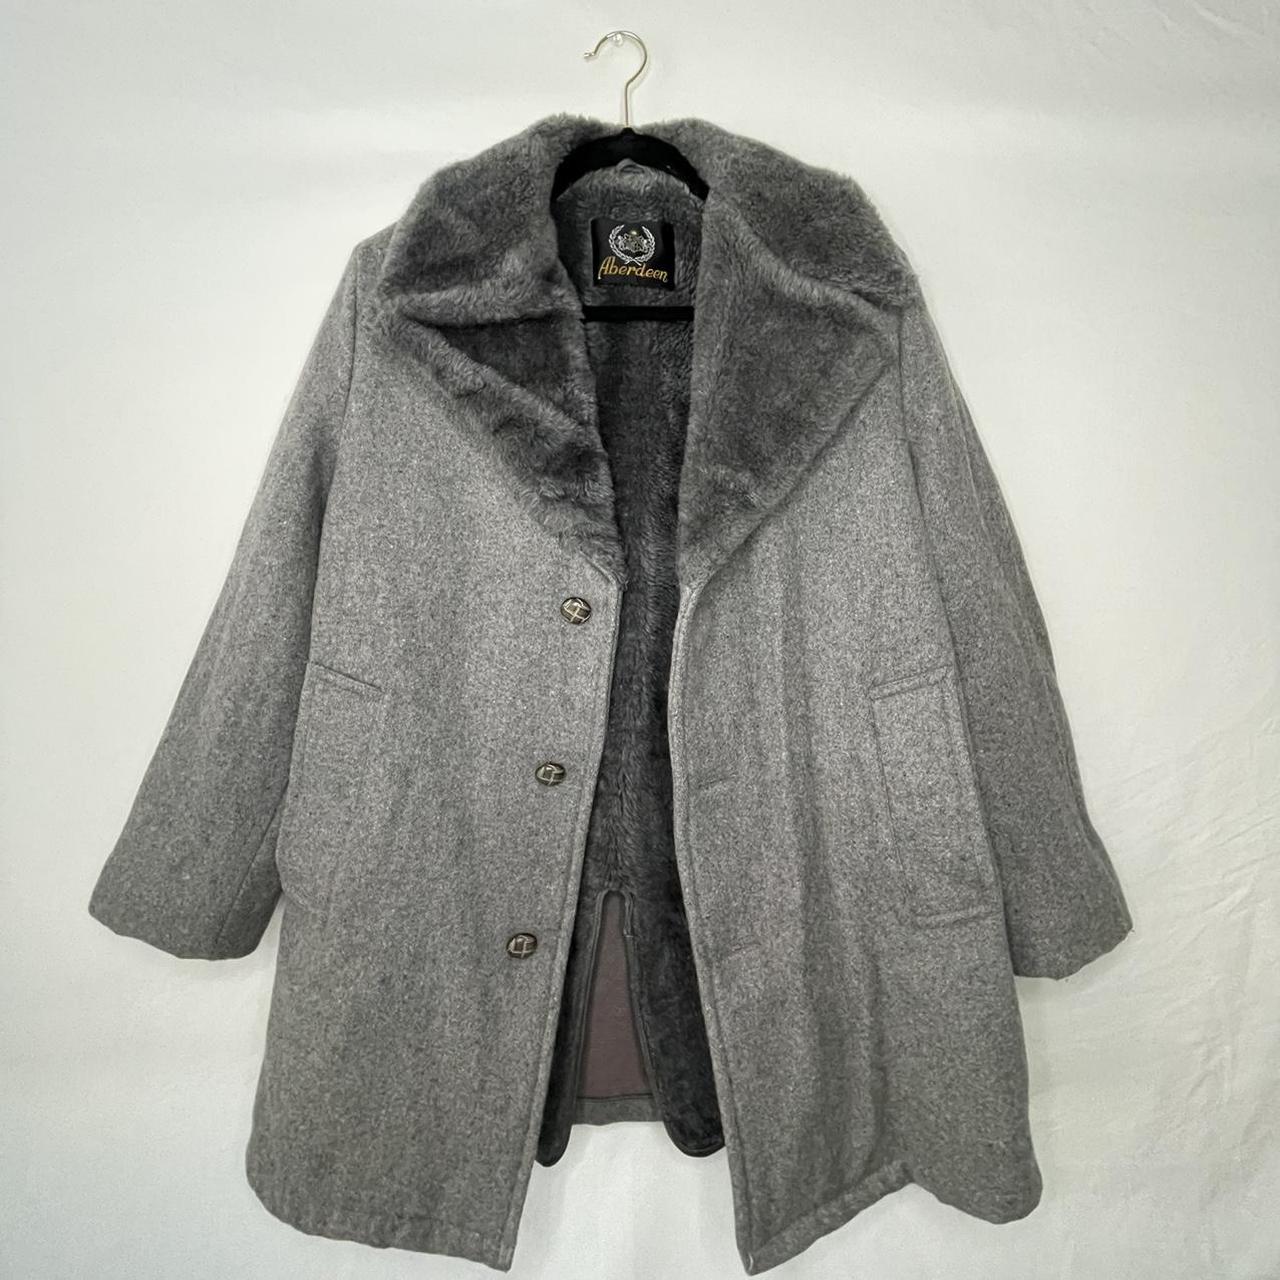 Wool coat by Aberdeen, vintage, size M, 3 buttons,... - Depop